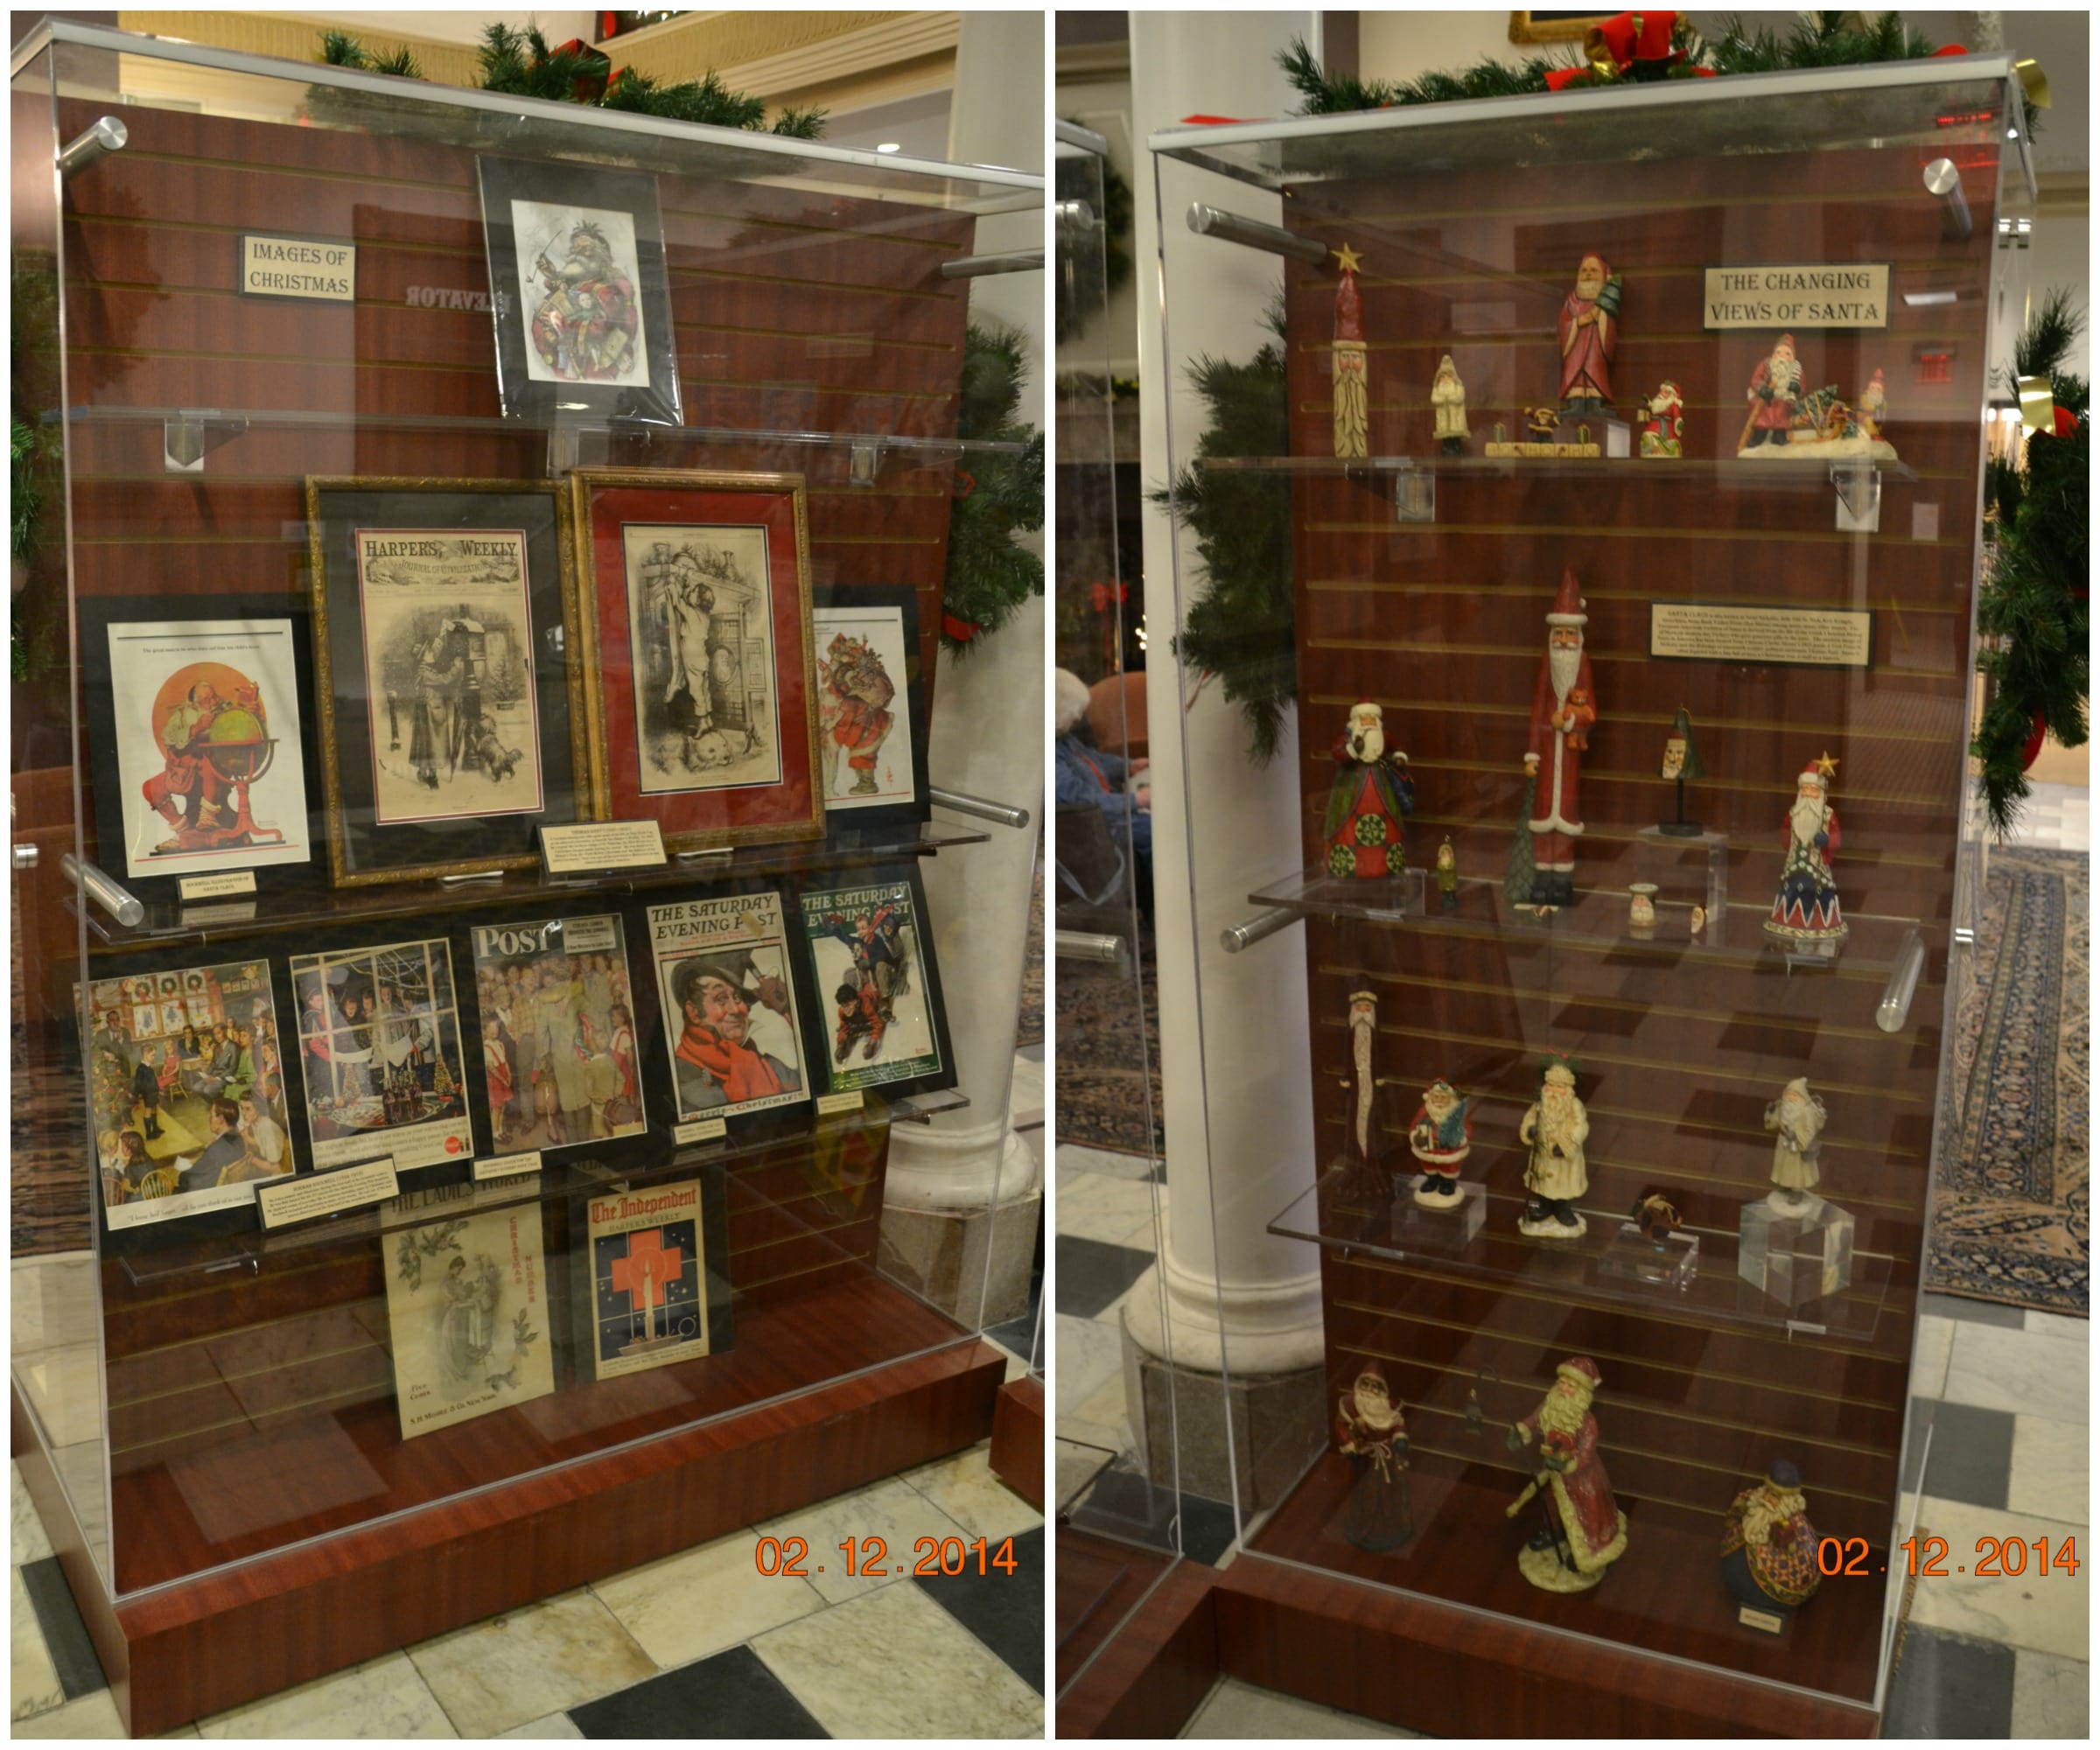 Images of Christmas and Changing Views of Santa Displays